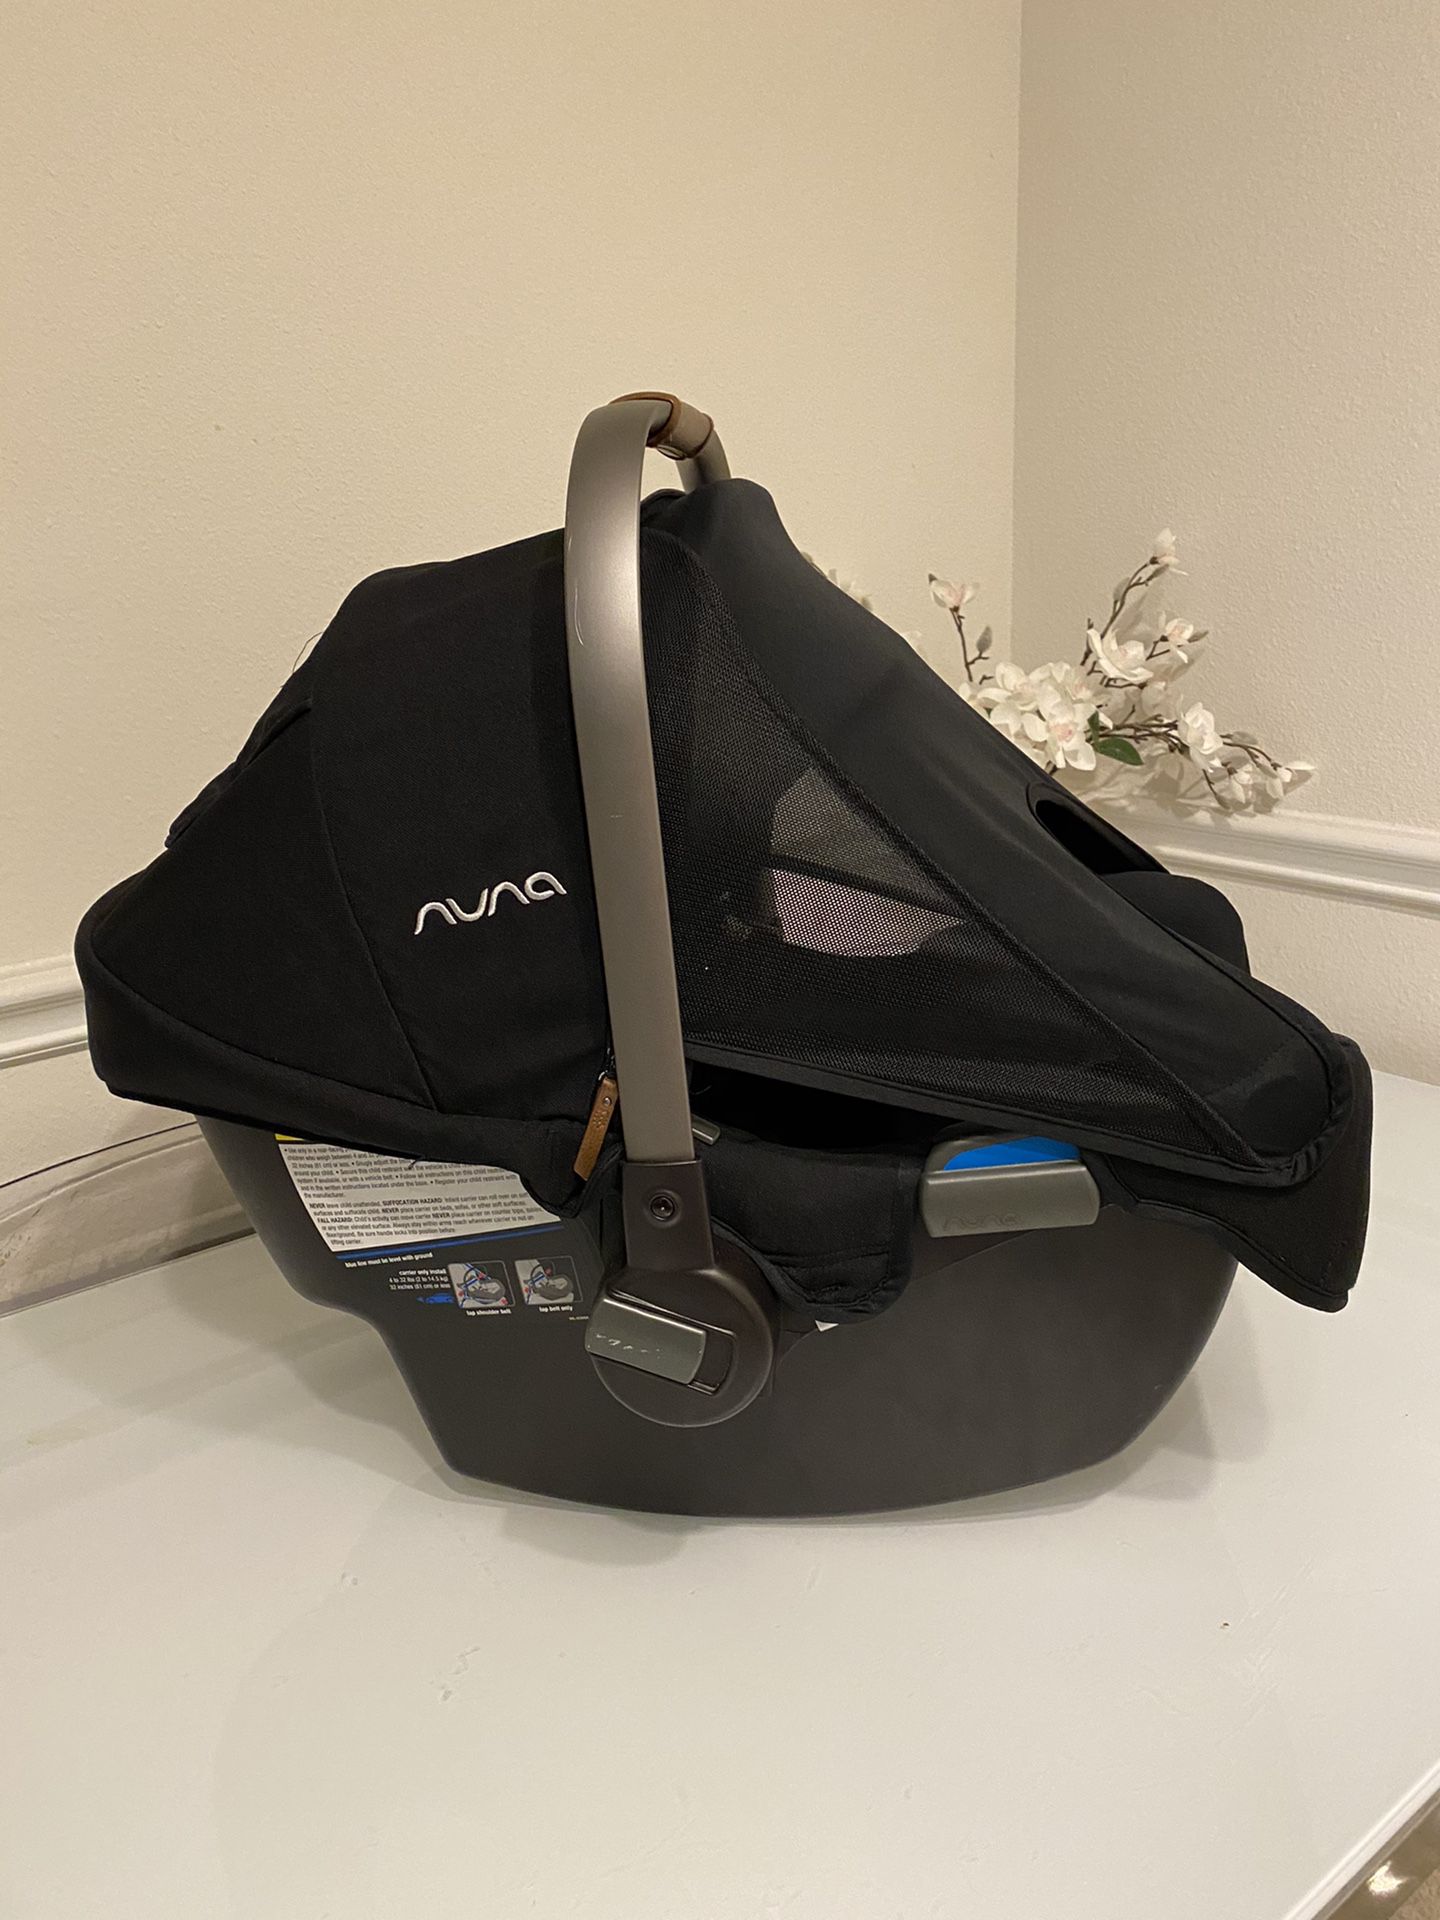 Nuna Pipa Infant Car Seat